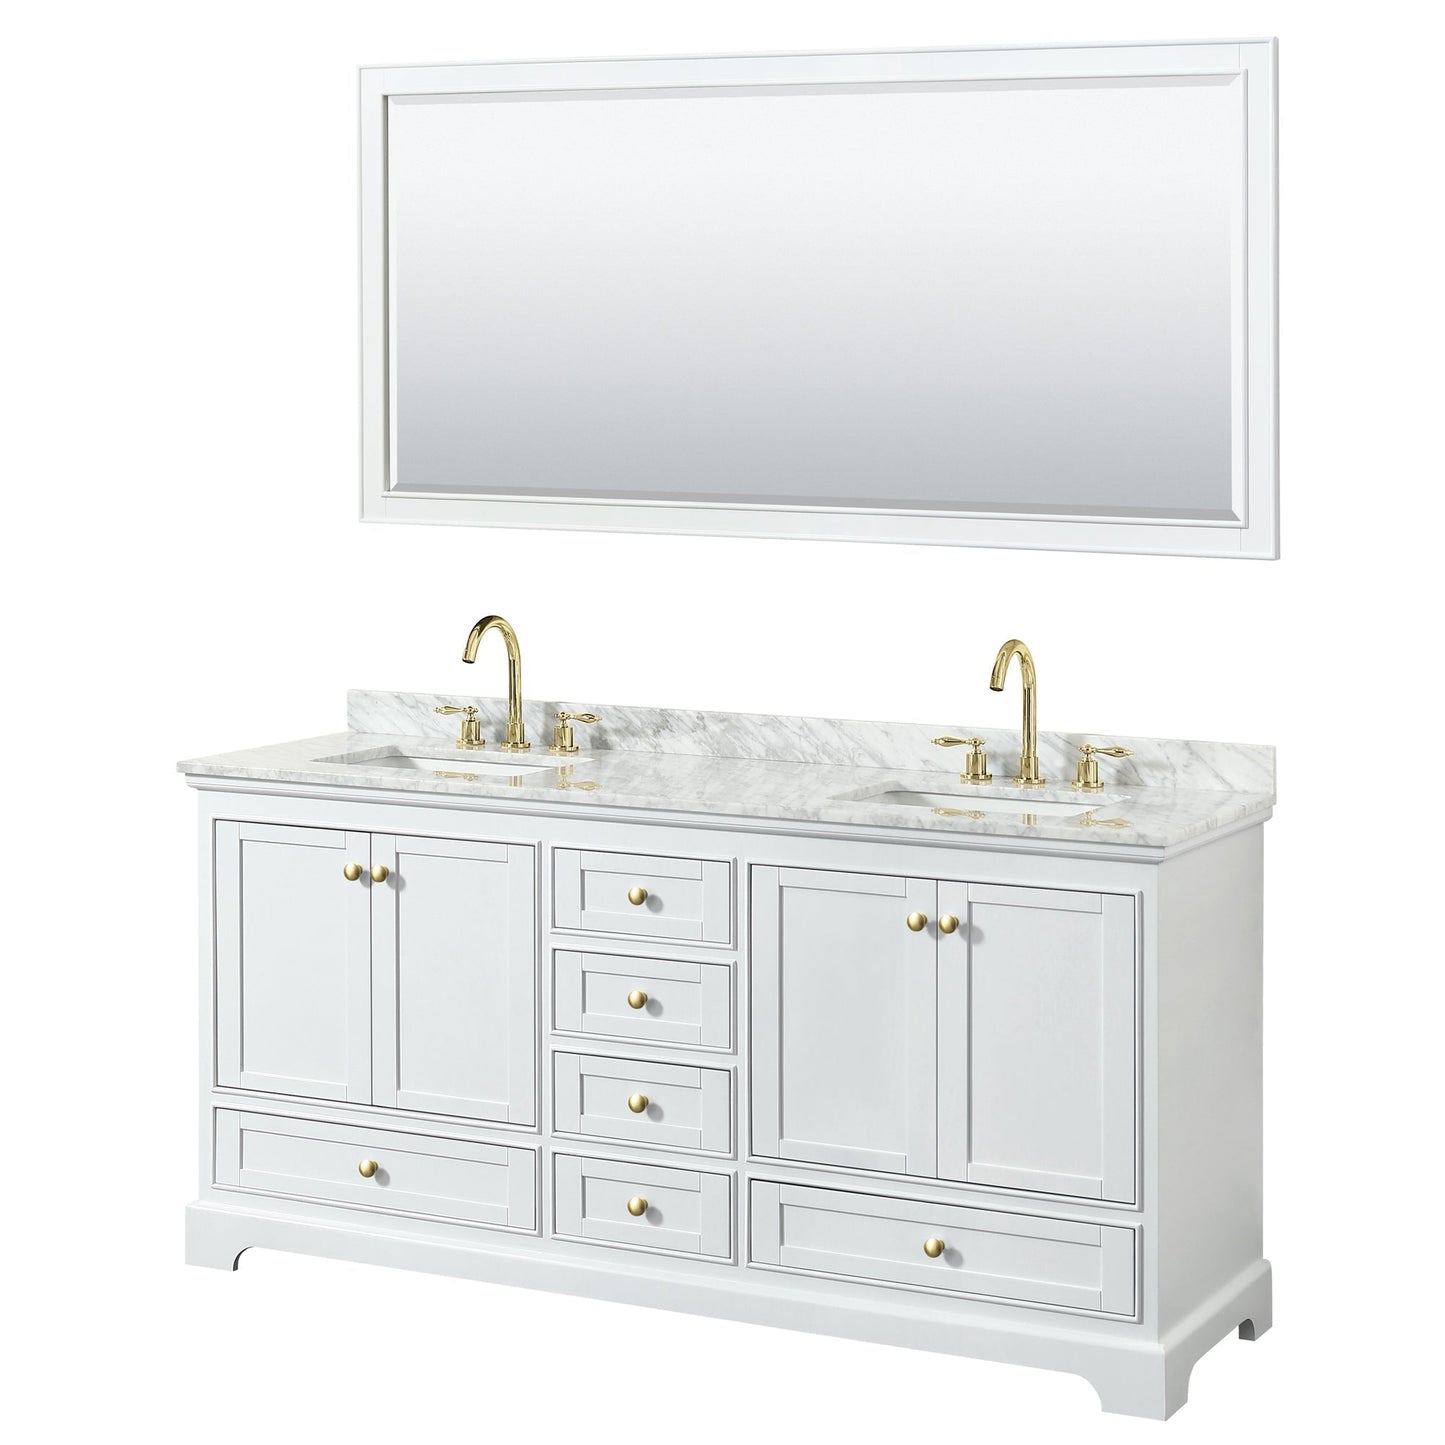 Wyndham Collection Deborah 72" Double Bathroom Vanity in White, White Carrara Marble Countertop, Undermount Square Sinks, Brushed Gold Trim, 70" Mirror